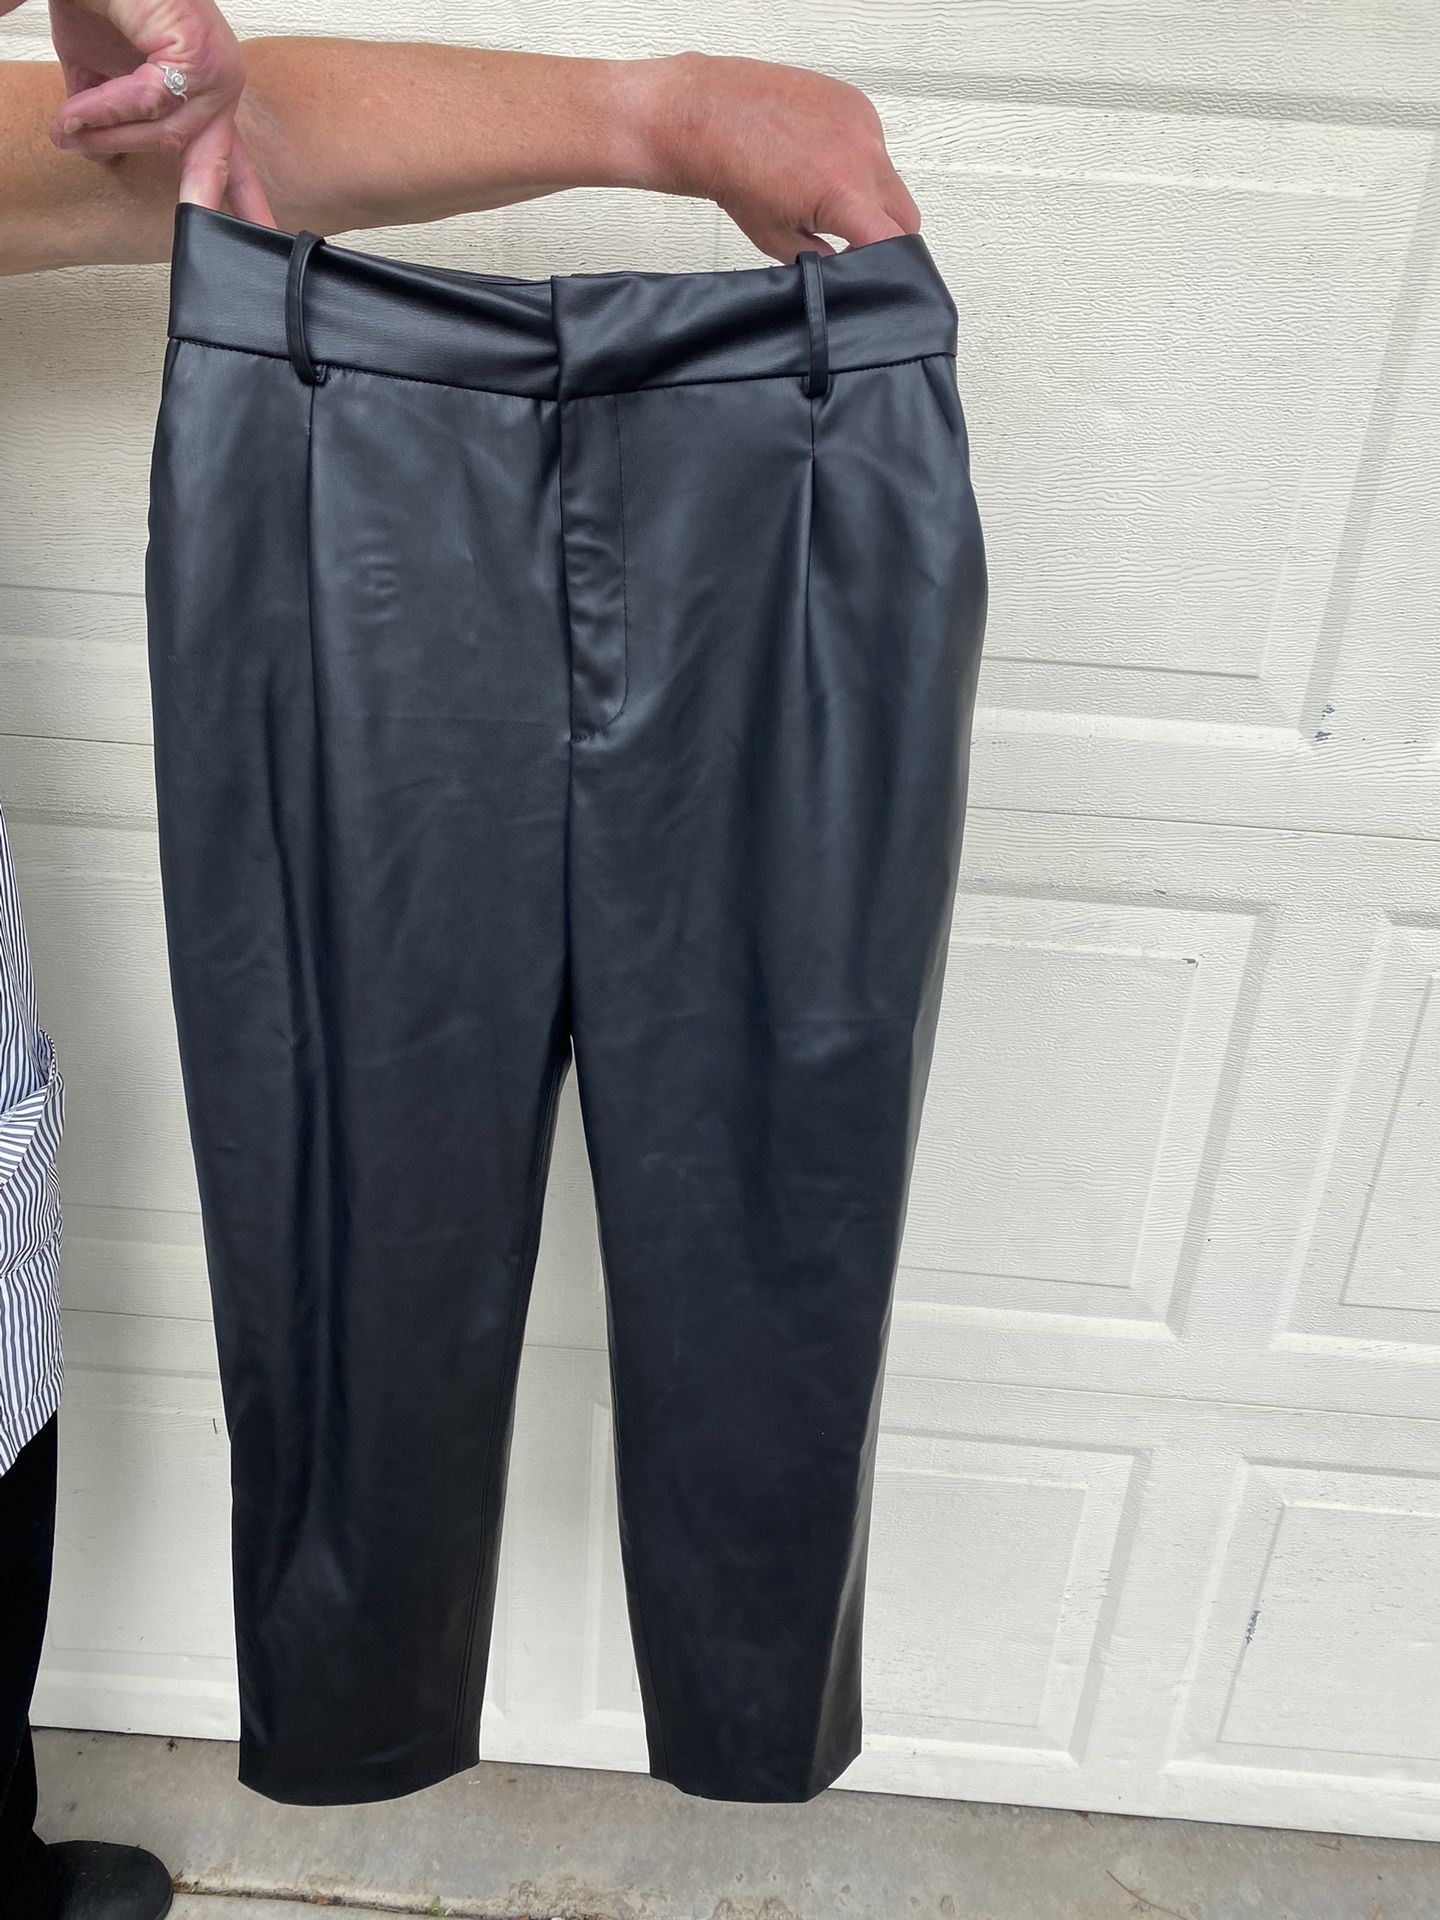 Zara faux, leather pants size large